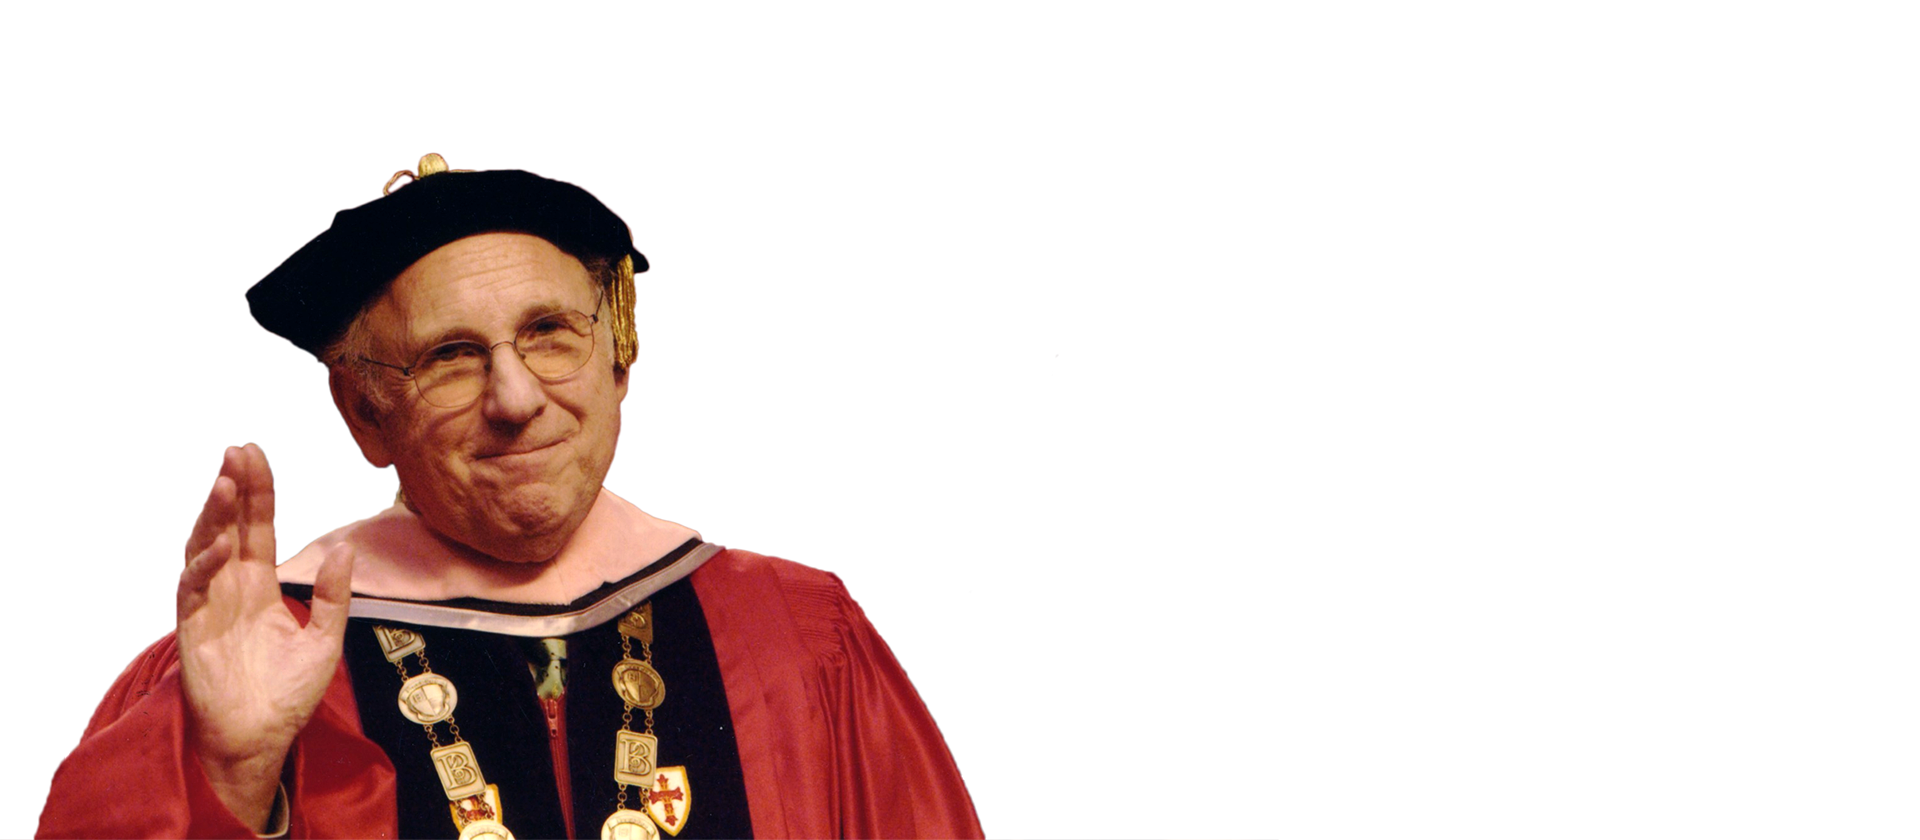 Visit the Library or click to see the online exhibit honoring Berklee's second president Lee Eliot Berk.